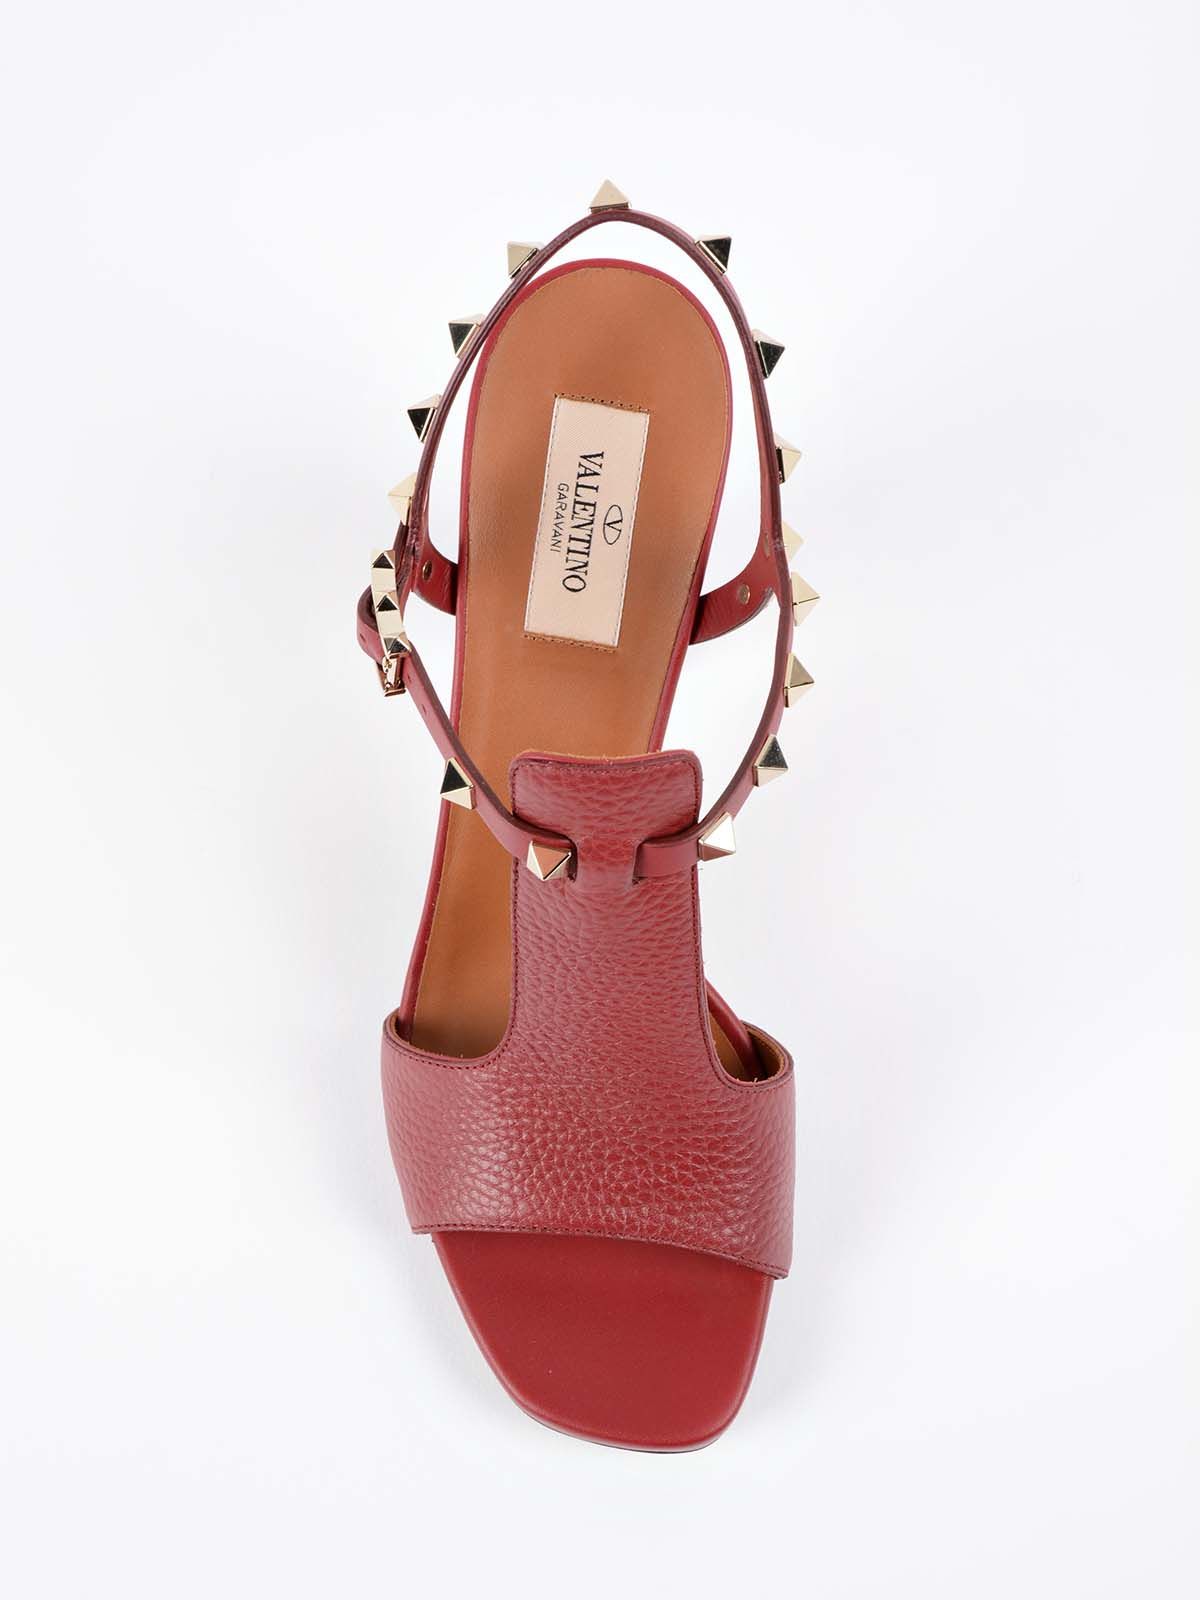 Valentino Garavani - Valentino Garavani Studded Sandals - Red, Women's